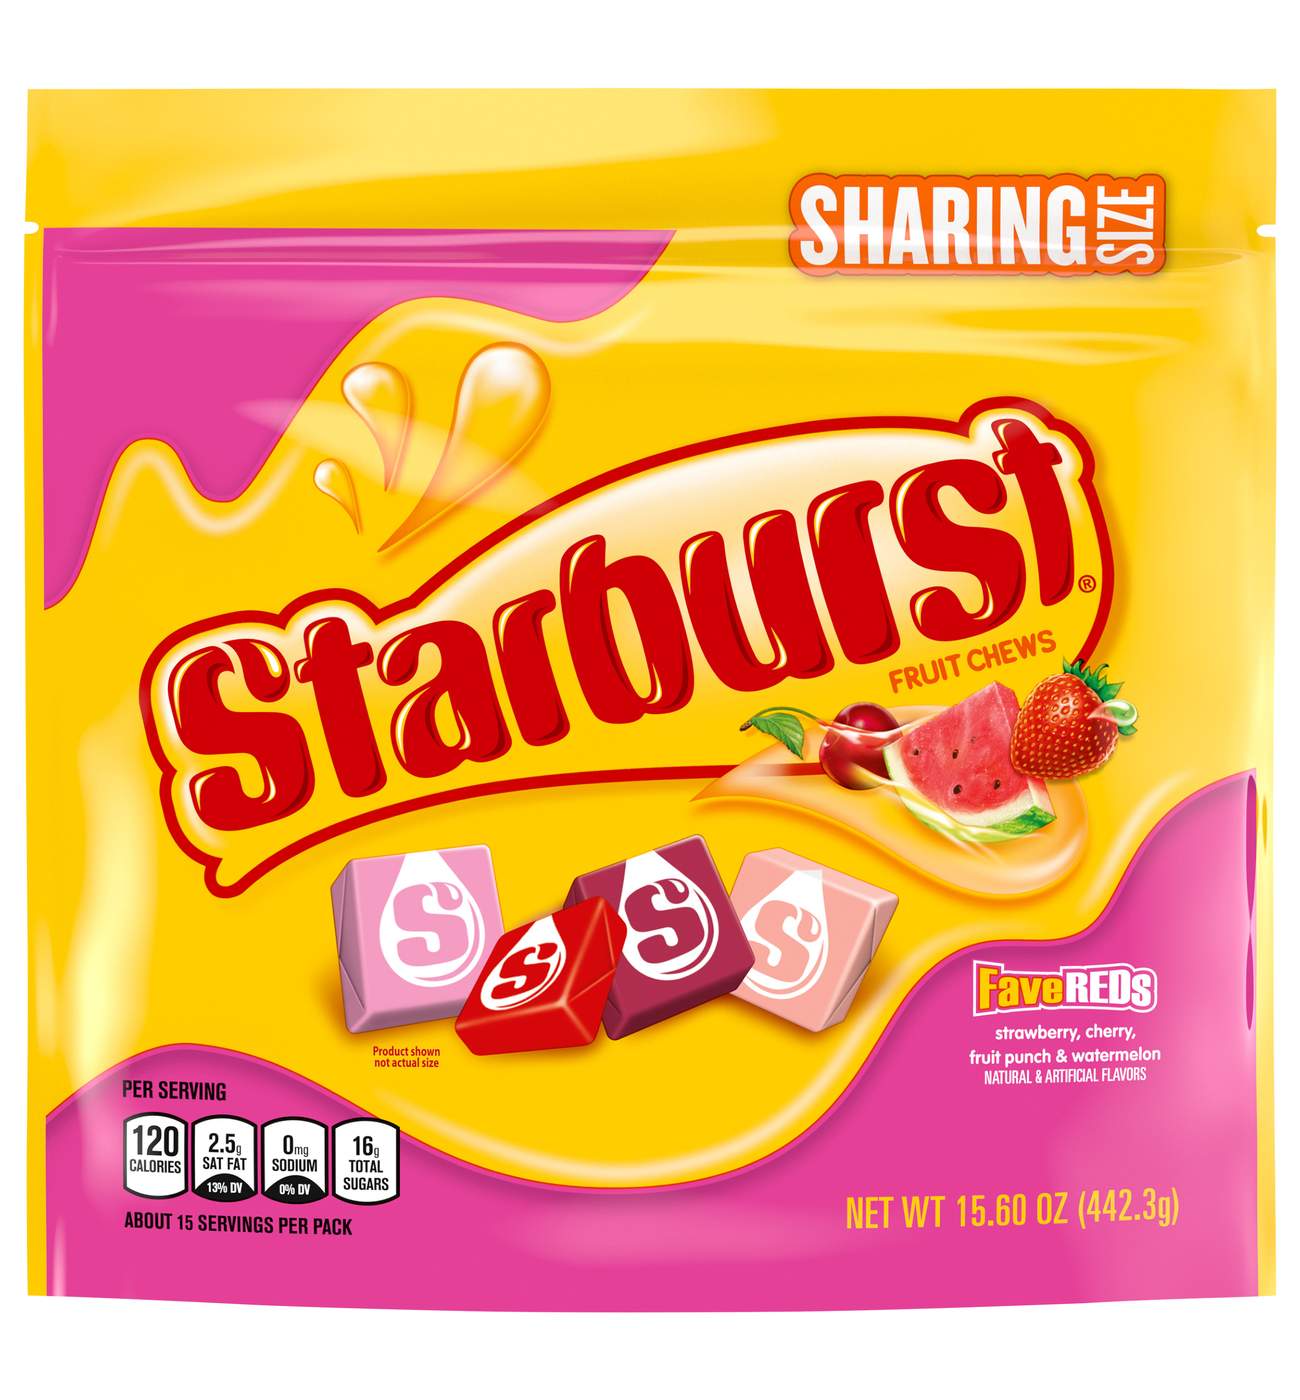 Starburst FaveReds Fruit Chews Candy - Sharing Size; image 1 of 10